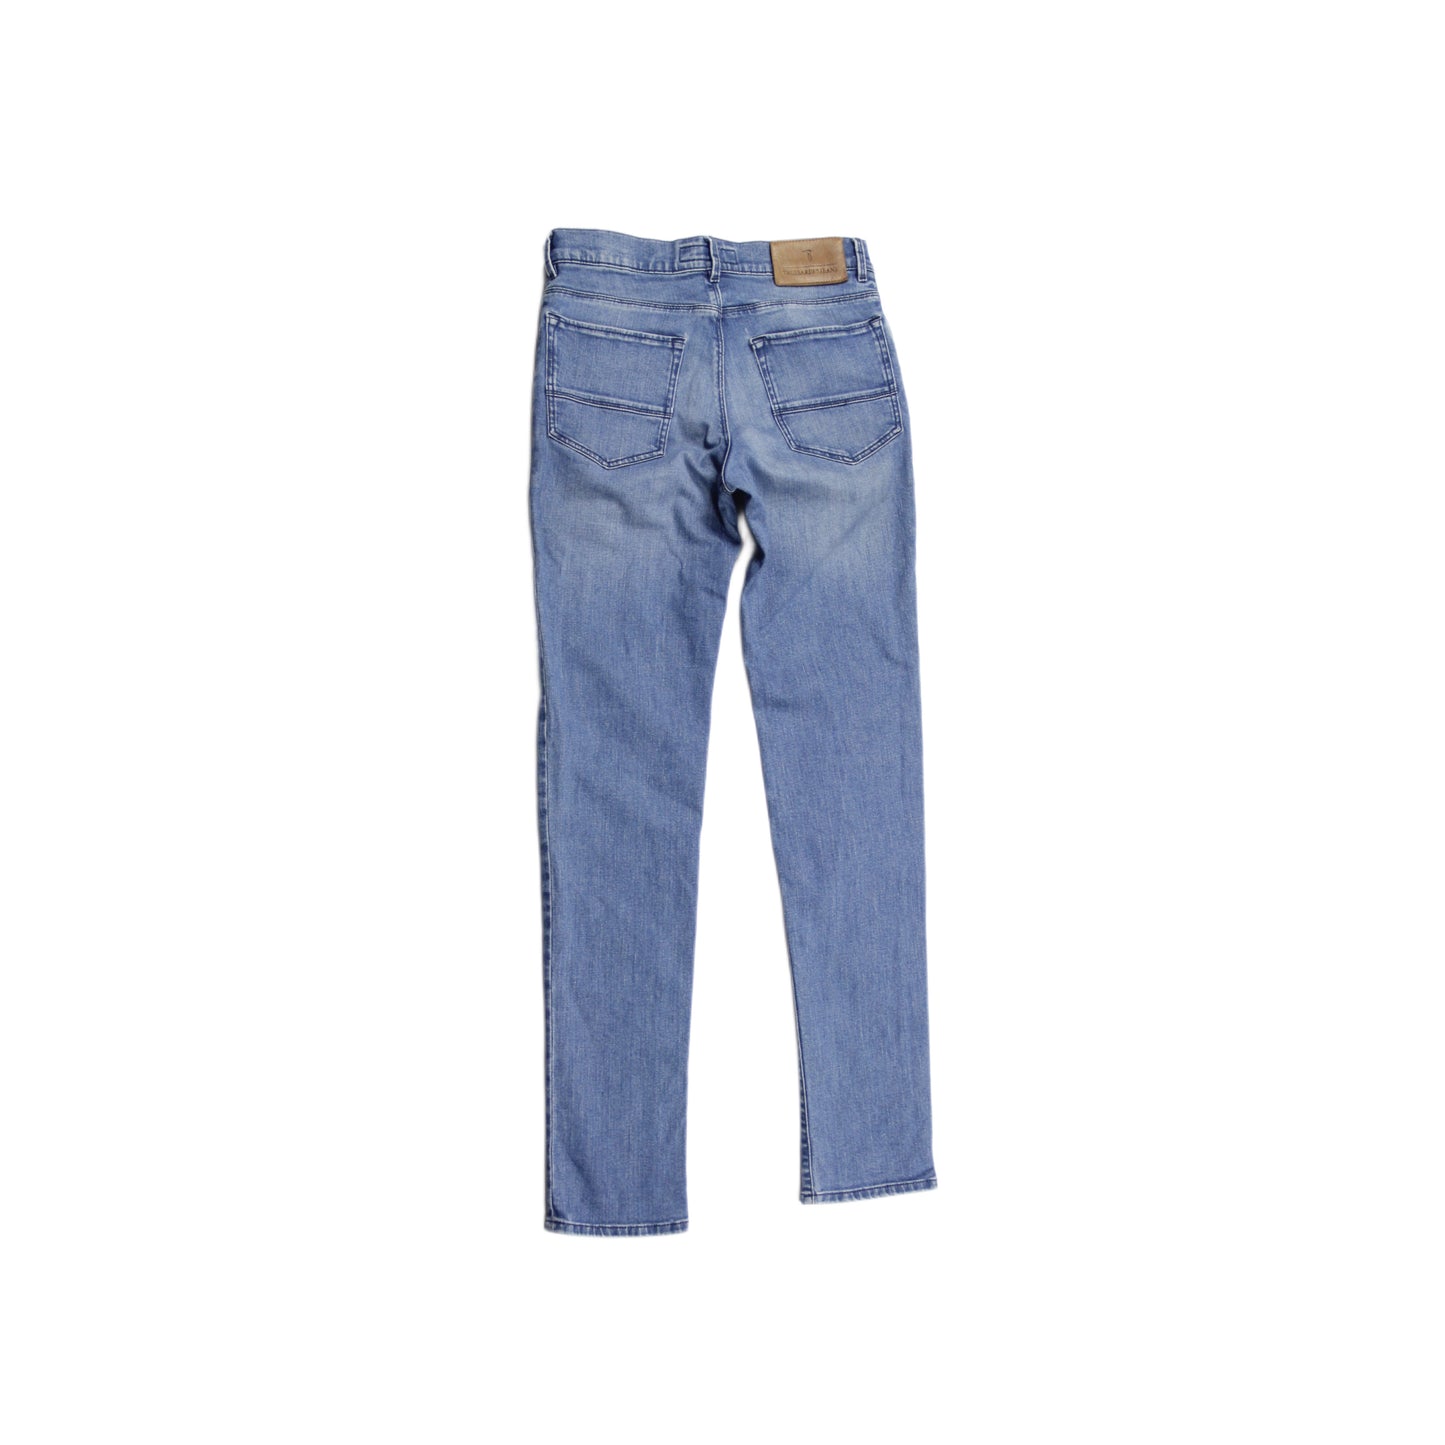 Trussardi Jeans Vintage Slim Fit